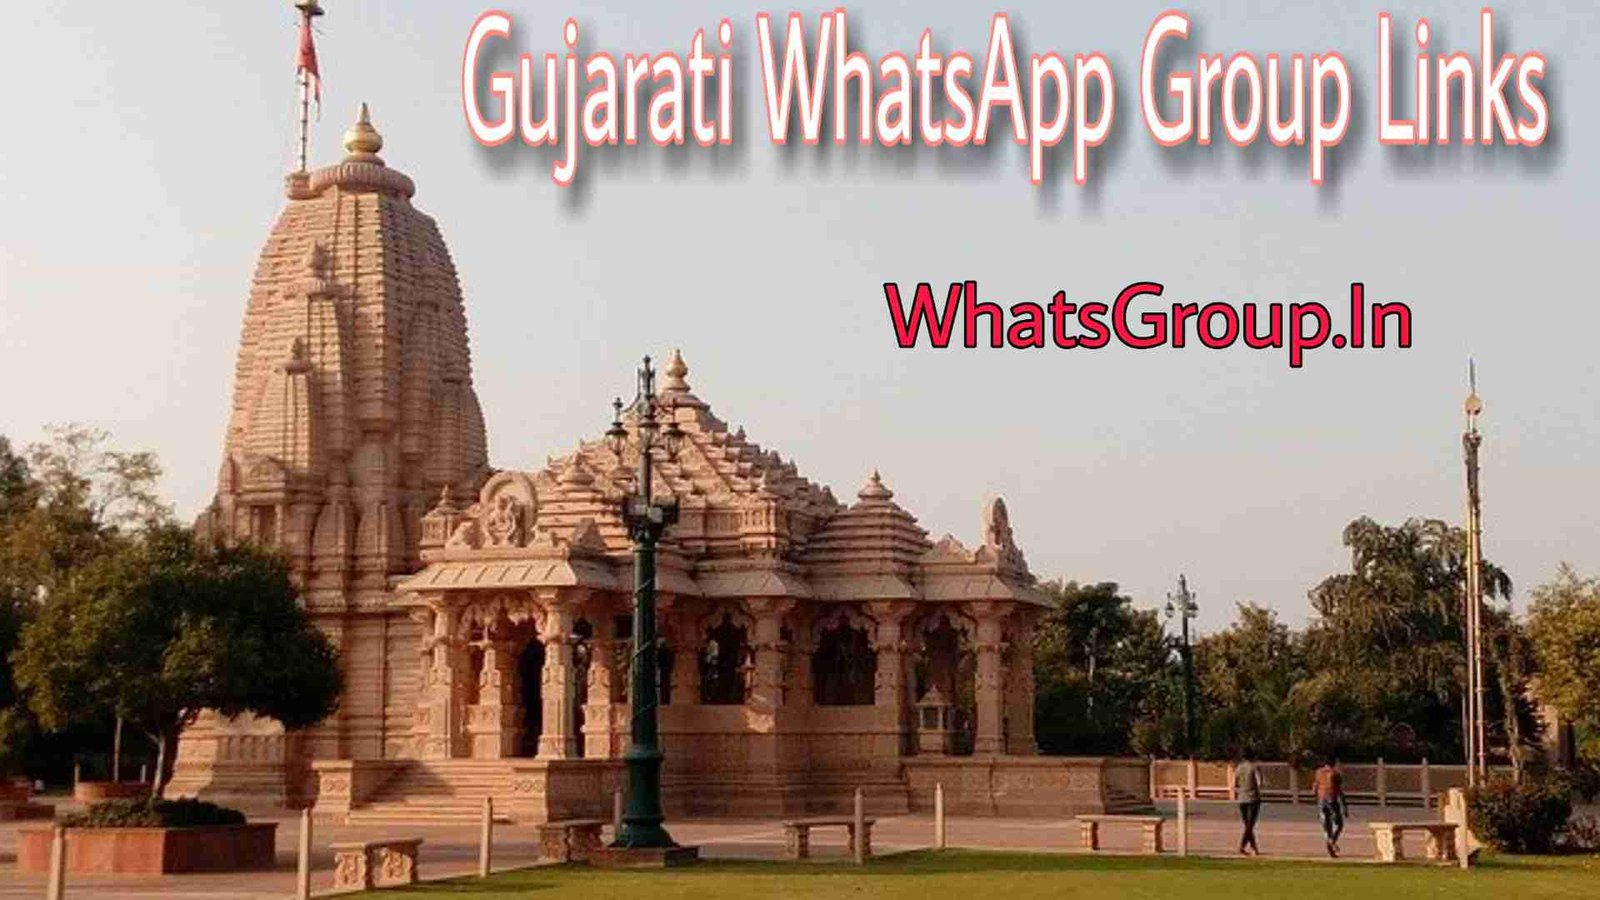 Gujarati WhatsApp Group Links